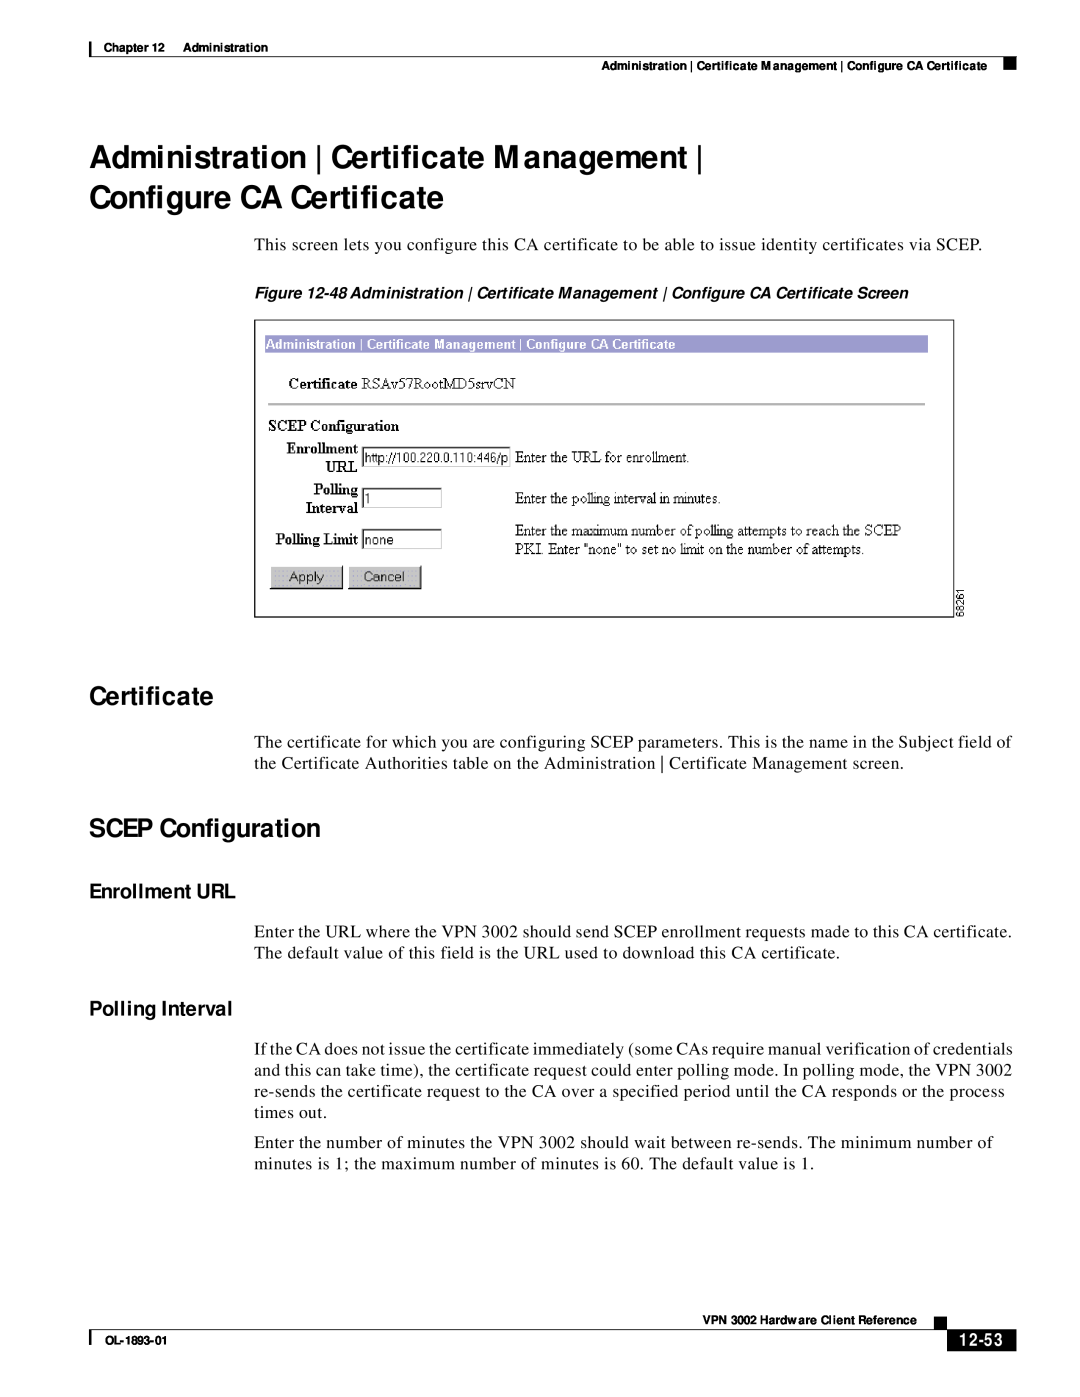 Cisco Systems VPN 3002 manual Administration | Certificate Management, Configure CA Certificate, SCEP Configuration, 12-53 